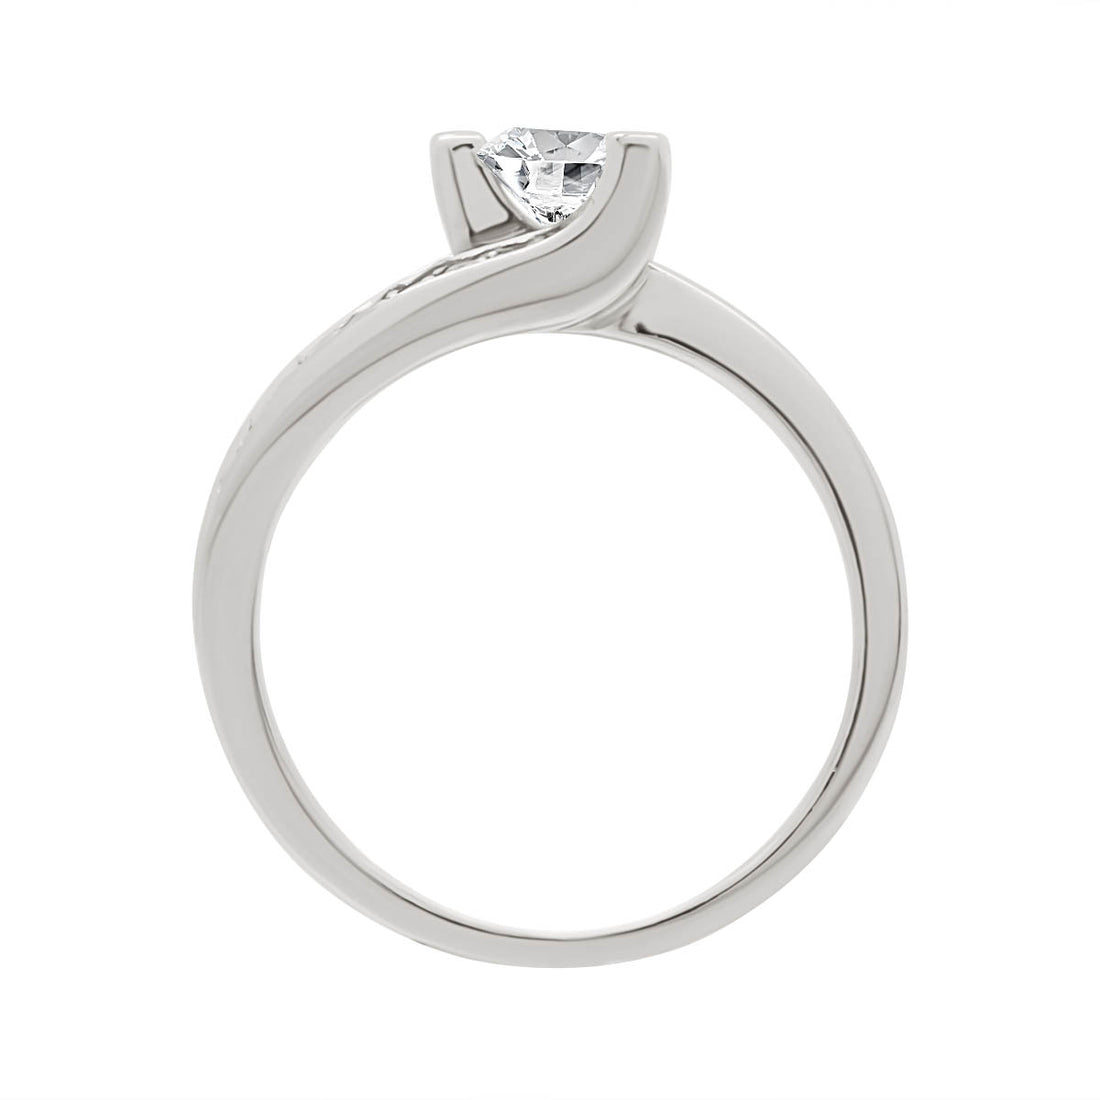 Unusual Diamond Engagement Ring Set in Platinum standing upright